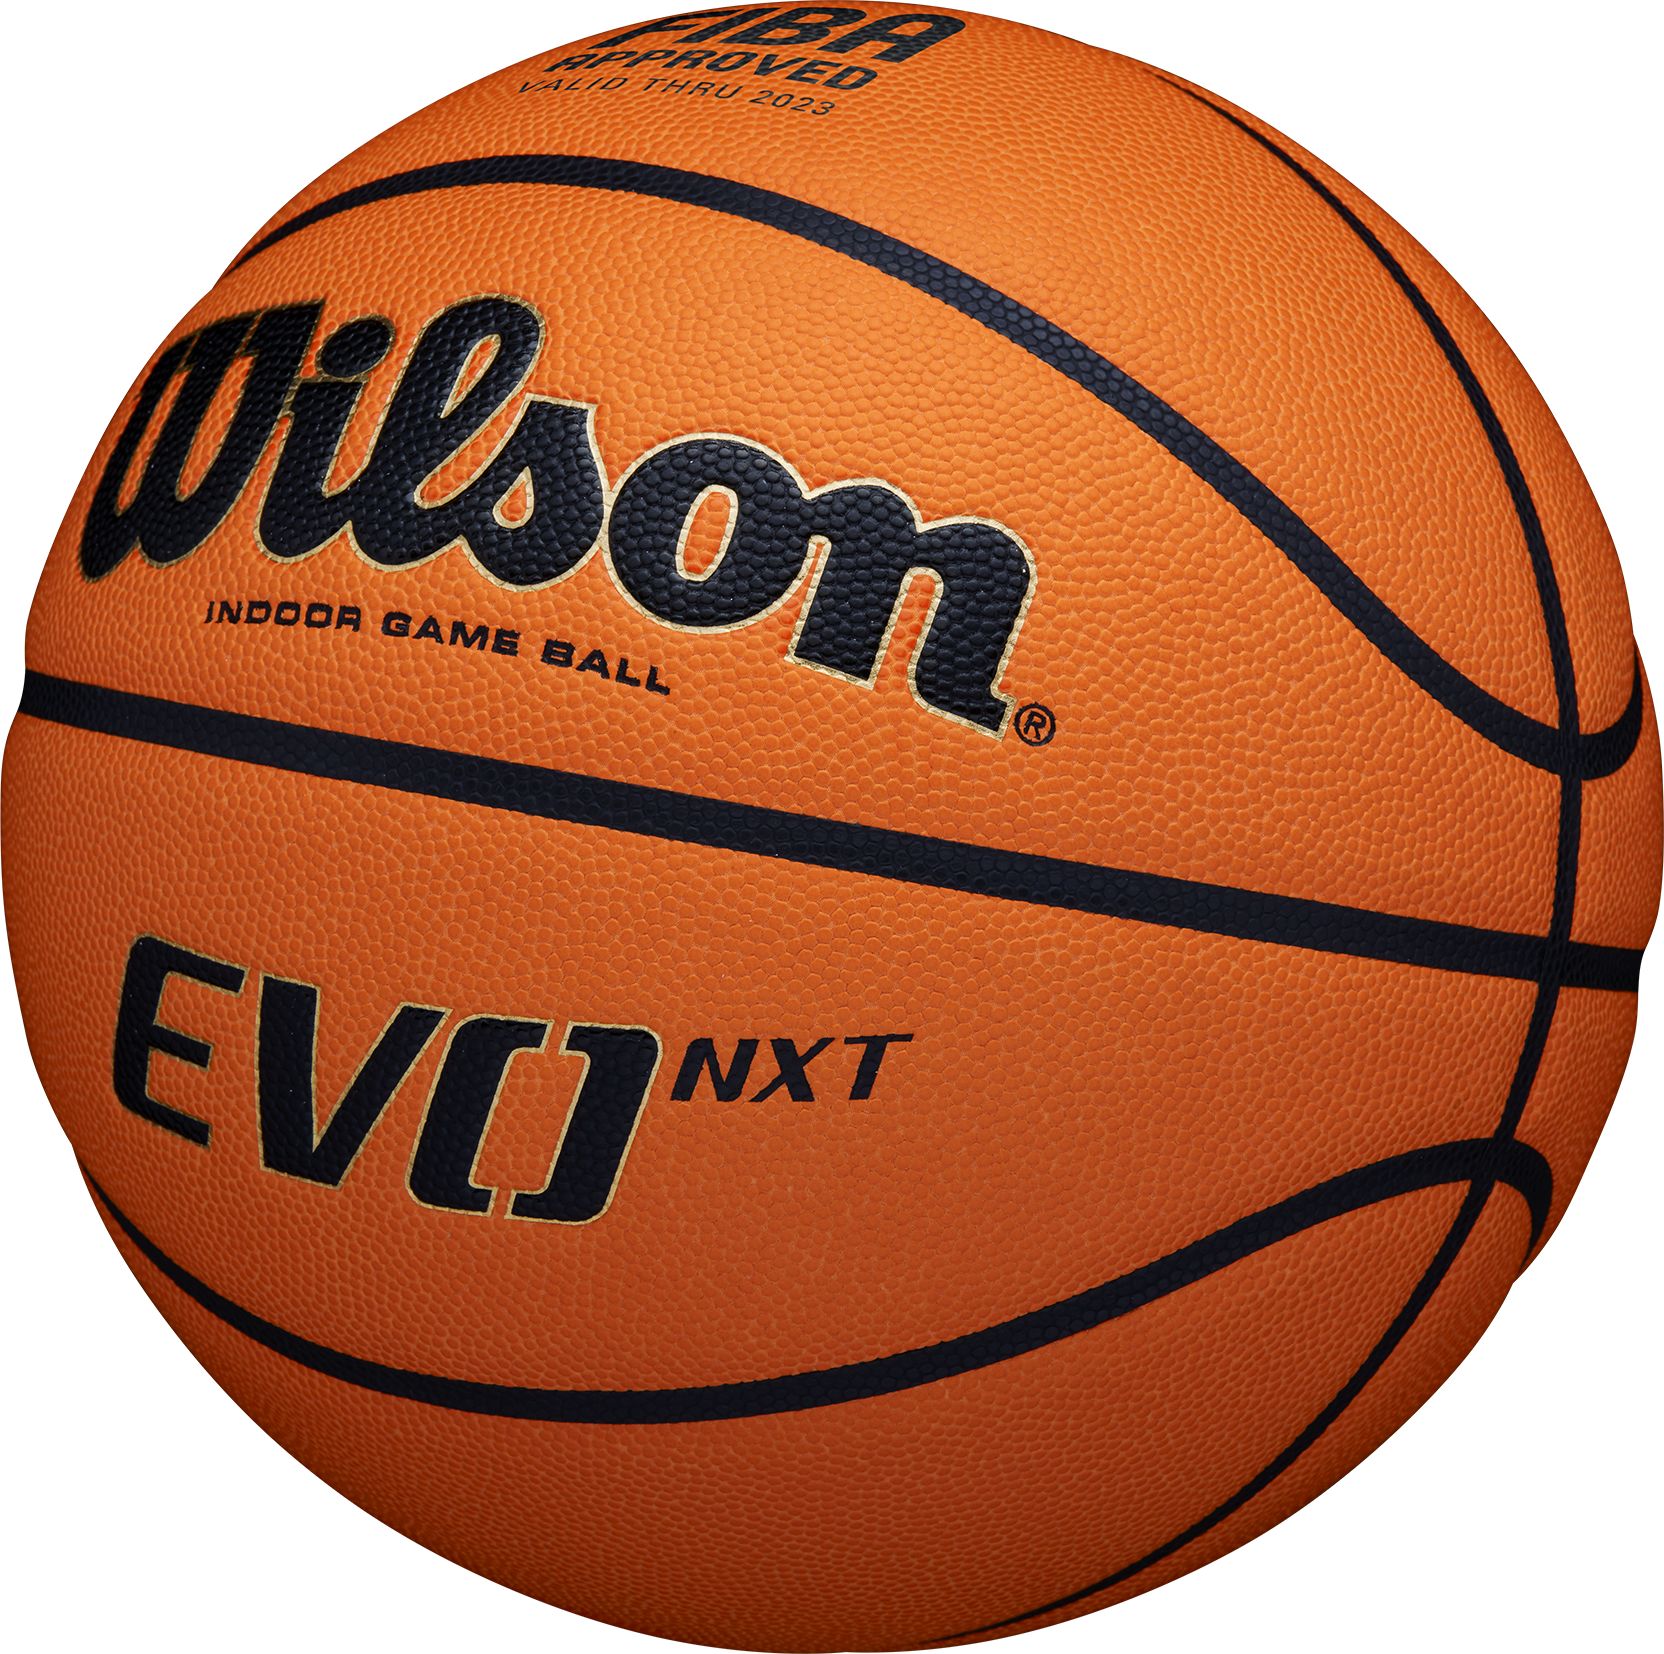 WILSON, EVO NXT FIBA GAME BALL 6